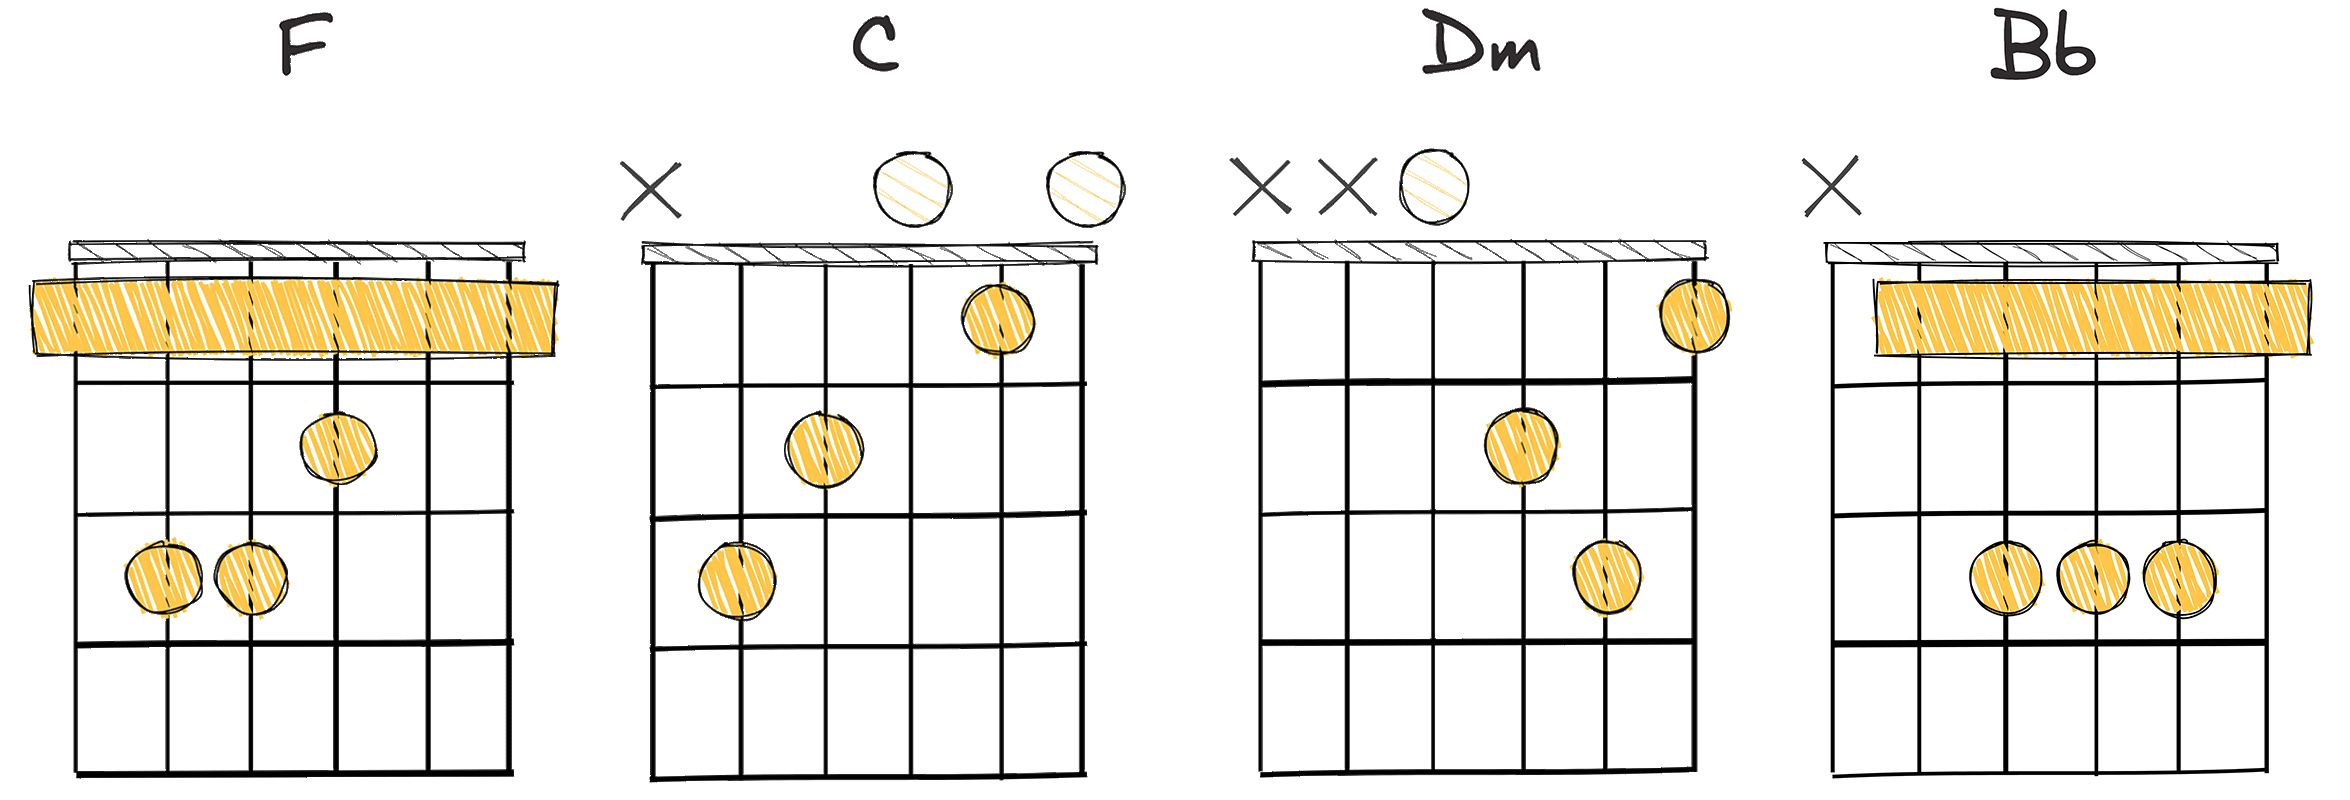 I - V - vi - IV (1 - 5 - 6 - 4) chords diagram